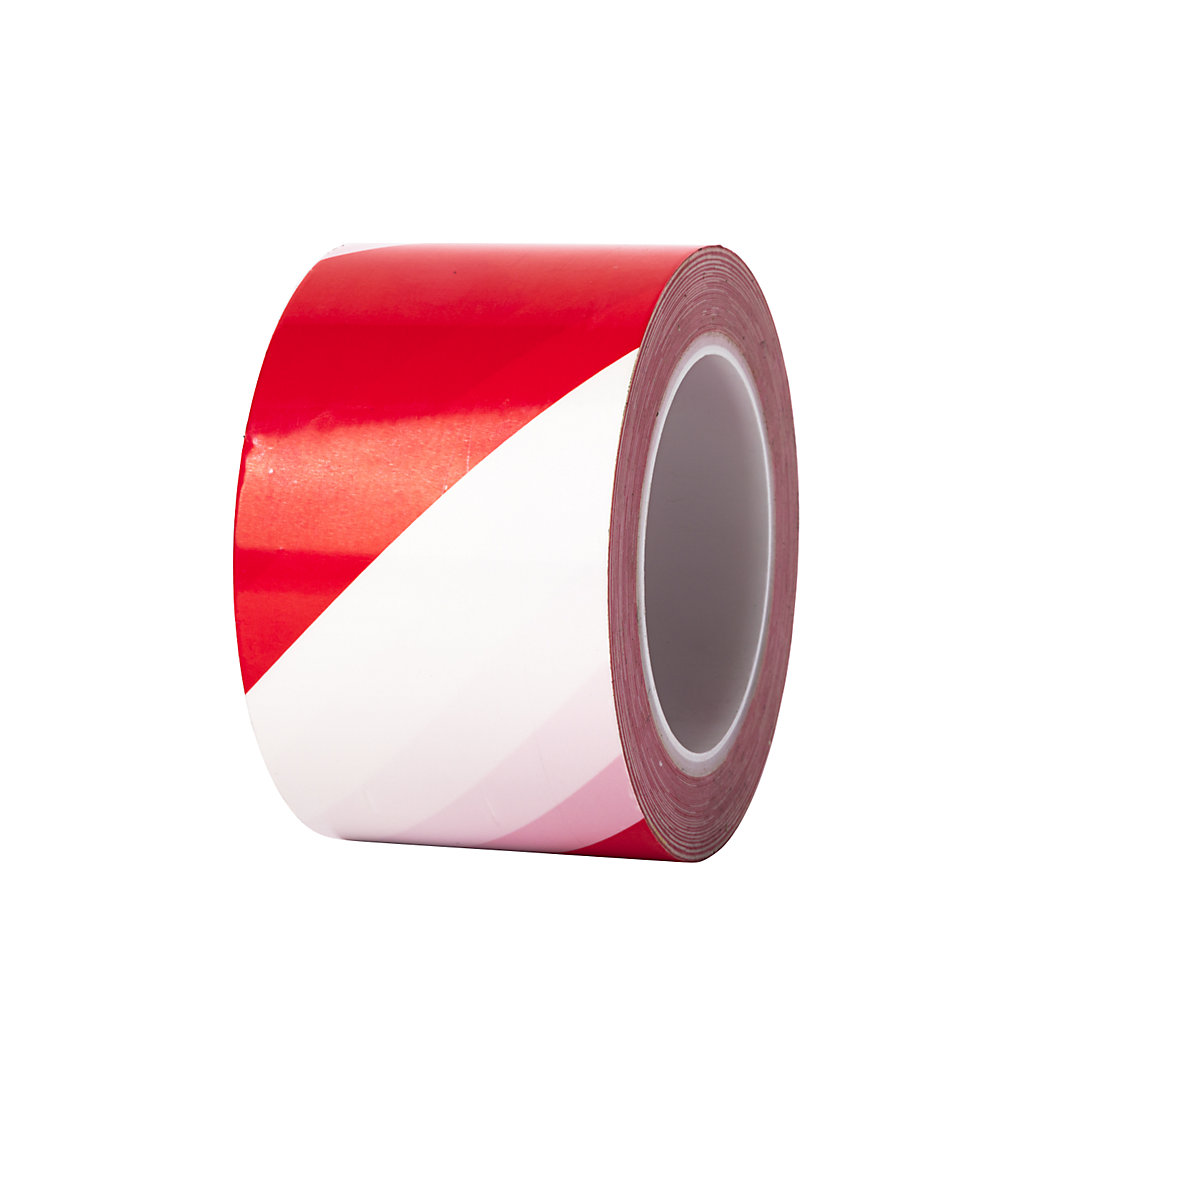 Vloermarkeringstape, extra sterk – Ampere, breedte 50 mm, dikte 0,2 mm, rood/wit-2